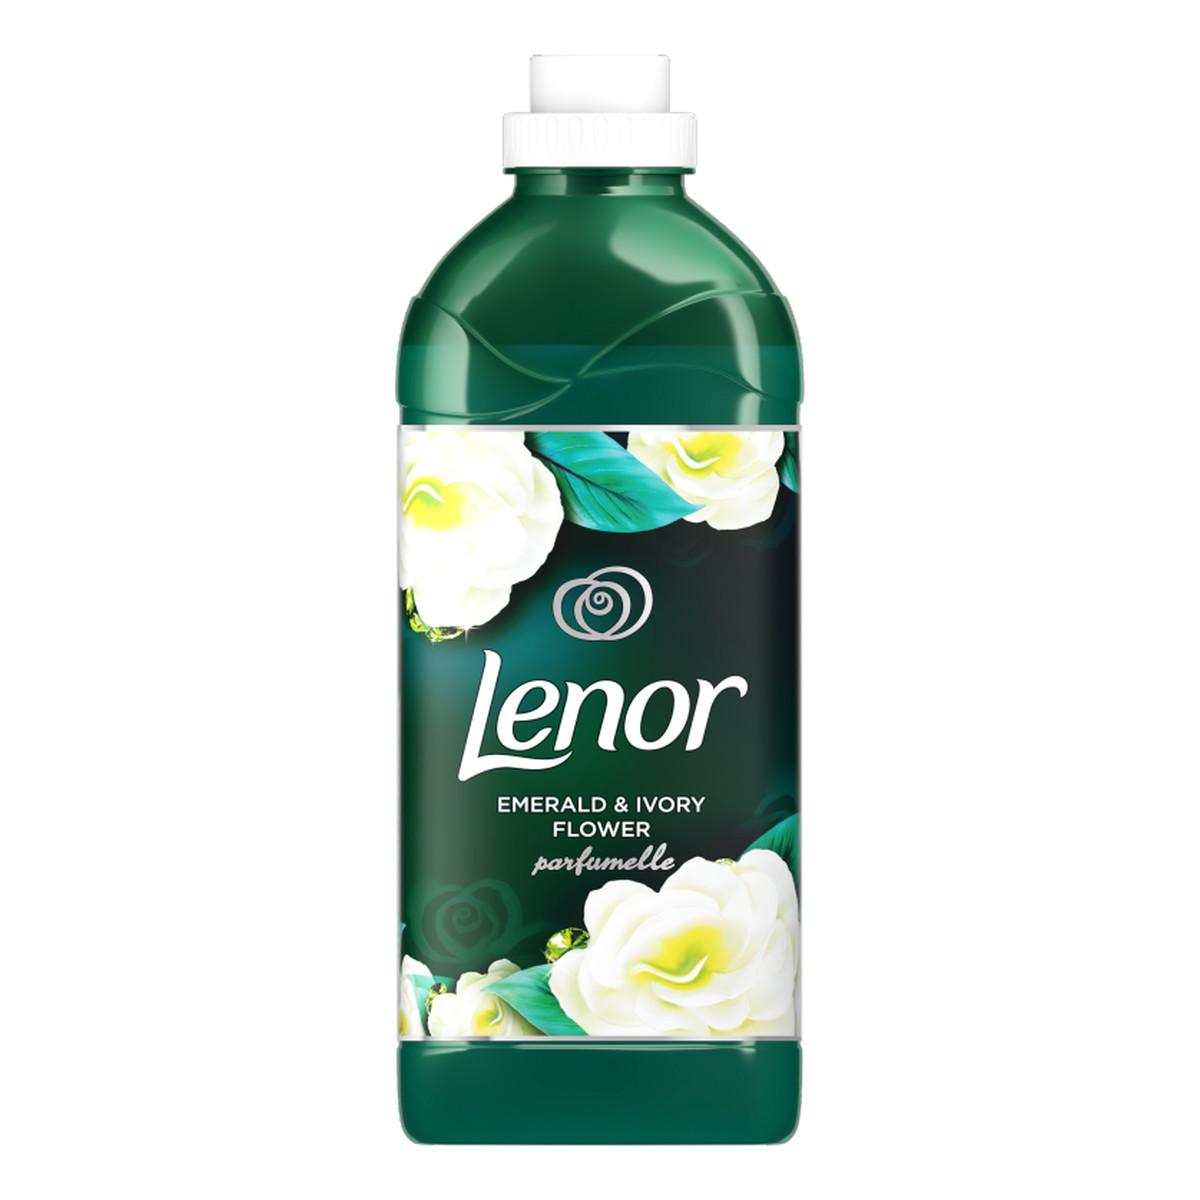 Lenor Perfumelle Emerald & Ivory Flower Szmaragd Płyn Do Płukania Tkanin 48 prań 1420ml